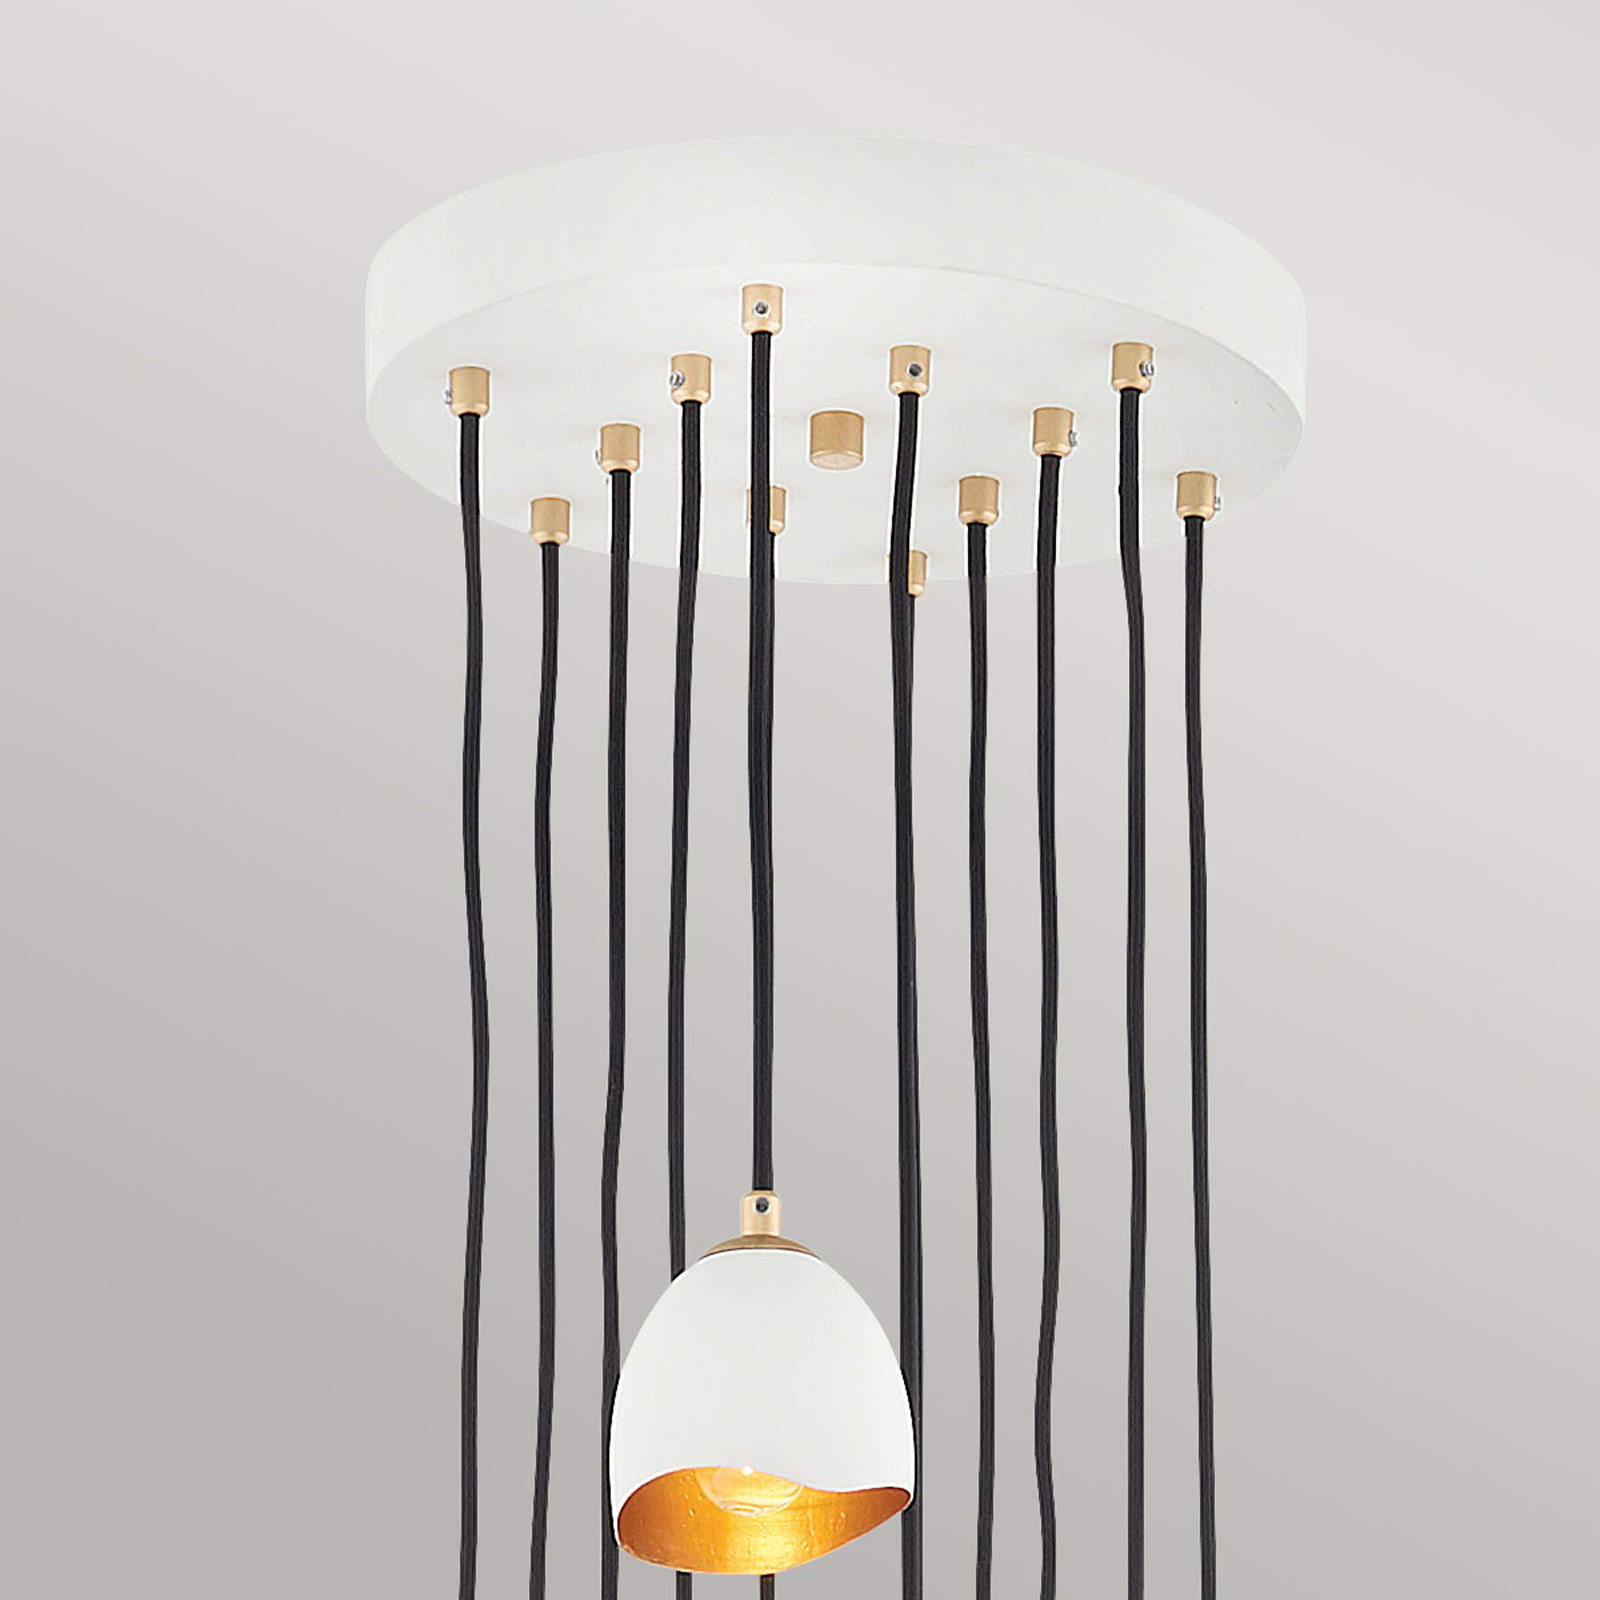 Nula pendant light, shell white/gold, 12-bulb